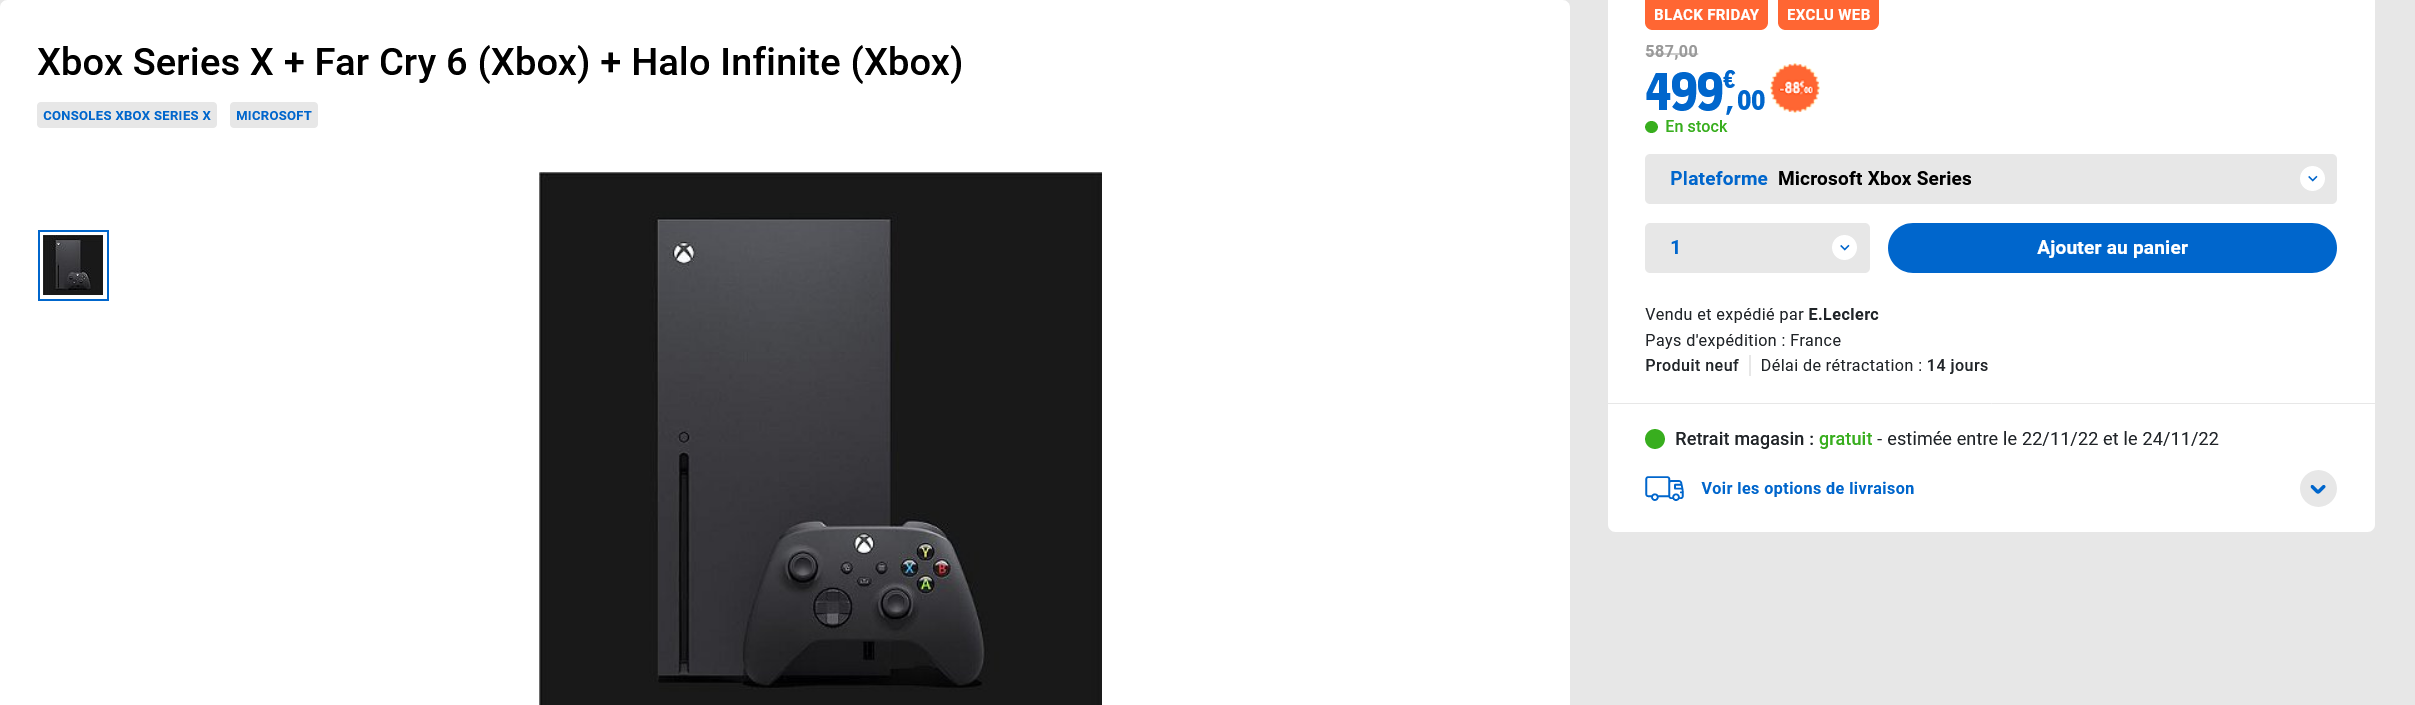 Xbox Series X promo Black Friday